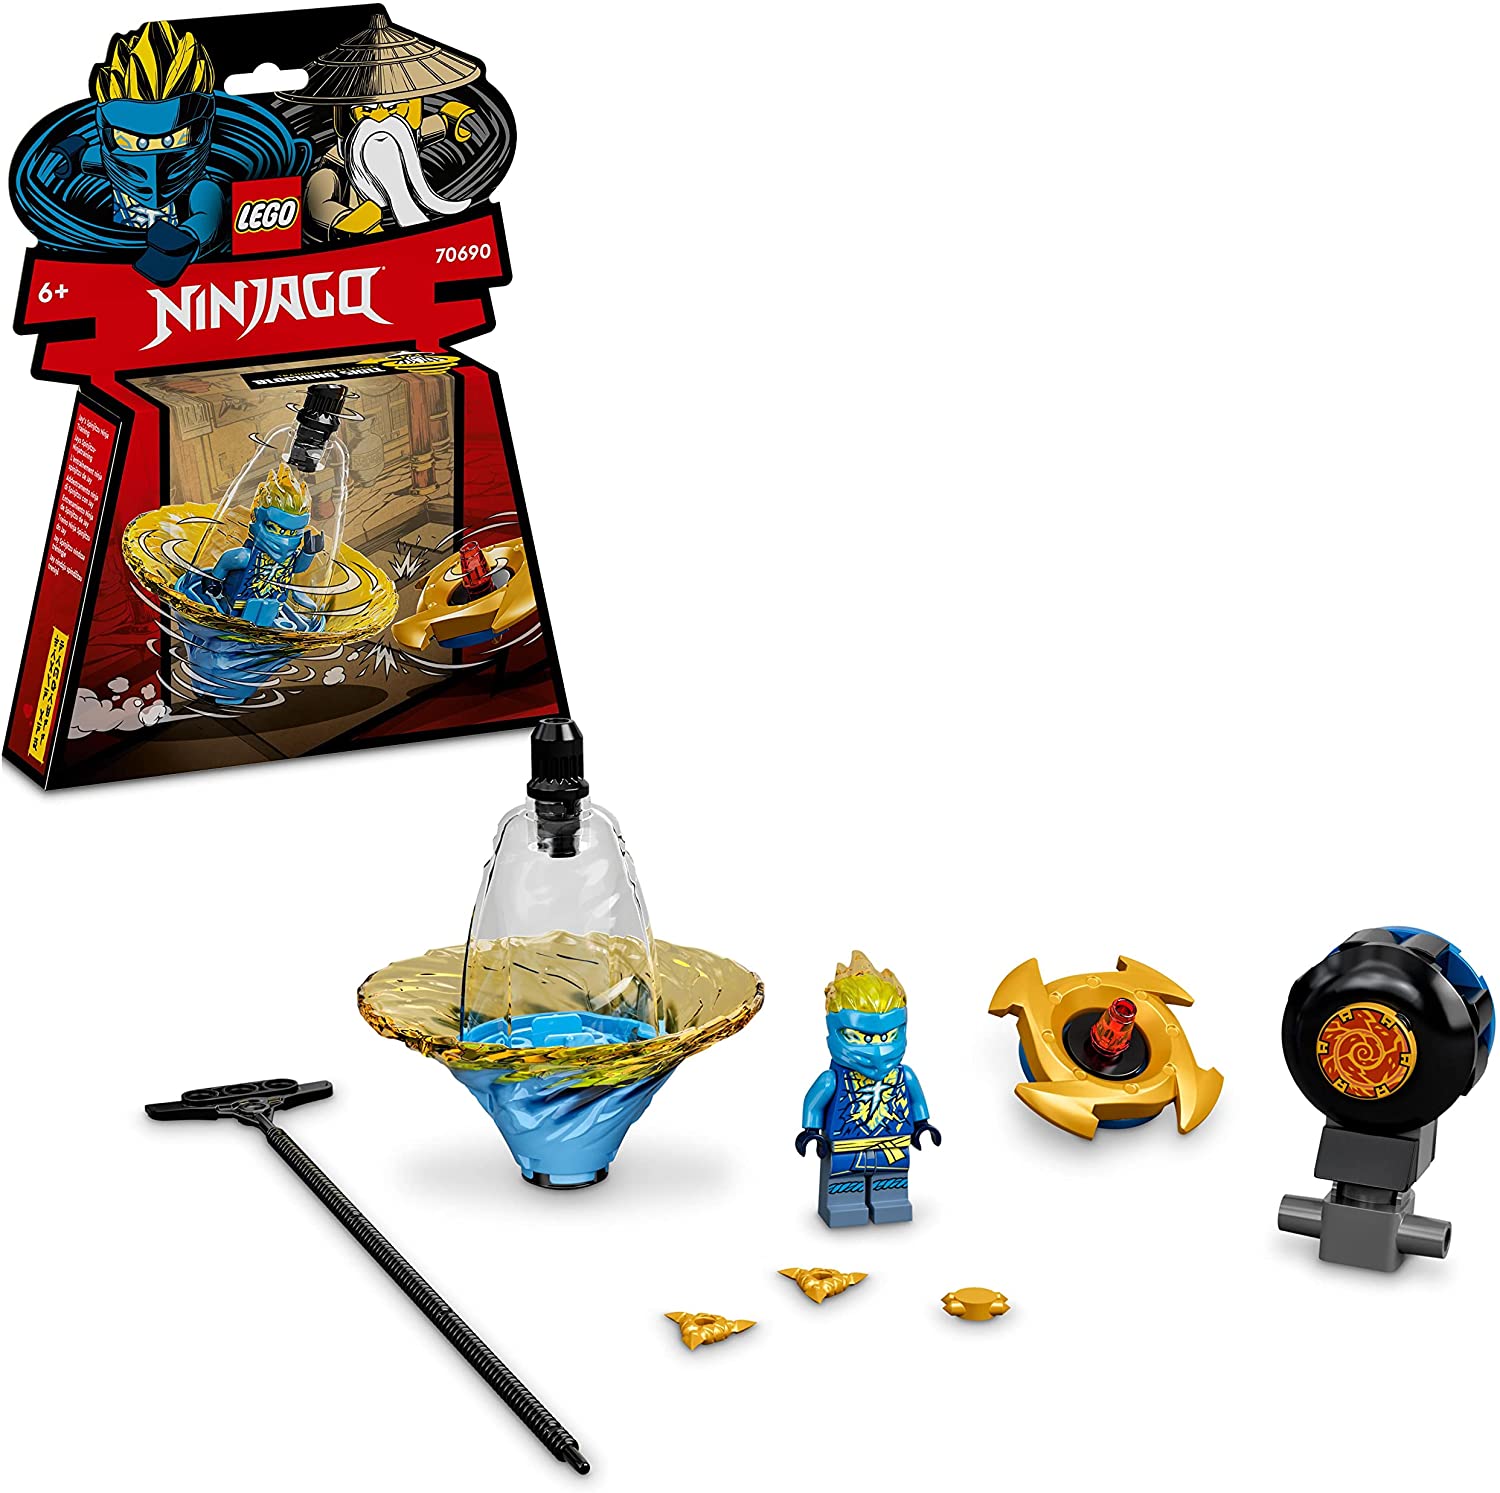 LEGO 70690 NINJAGO Jays Spinjitzu Ninjatraining Action Toy with Ninja Spinn